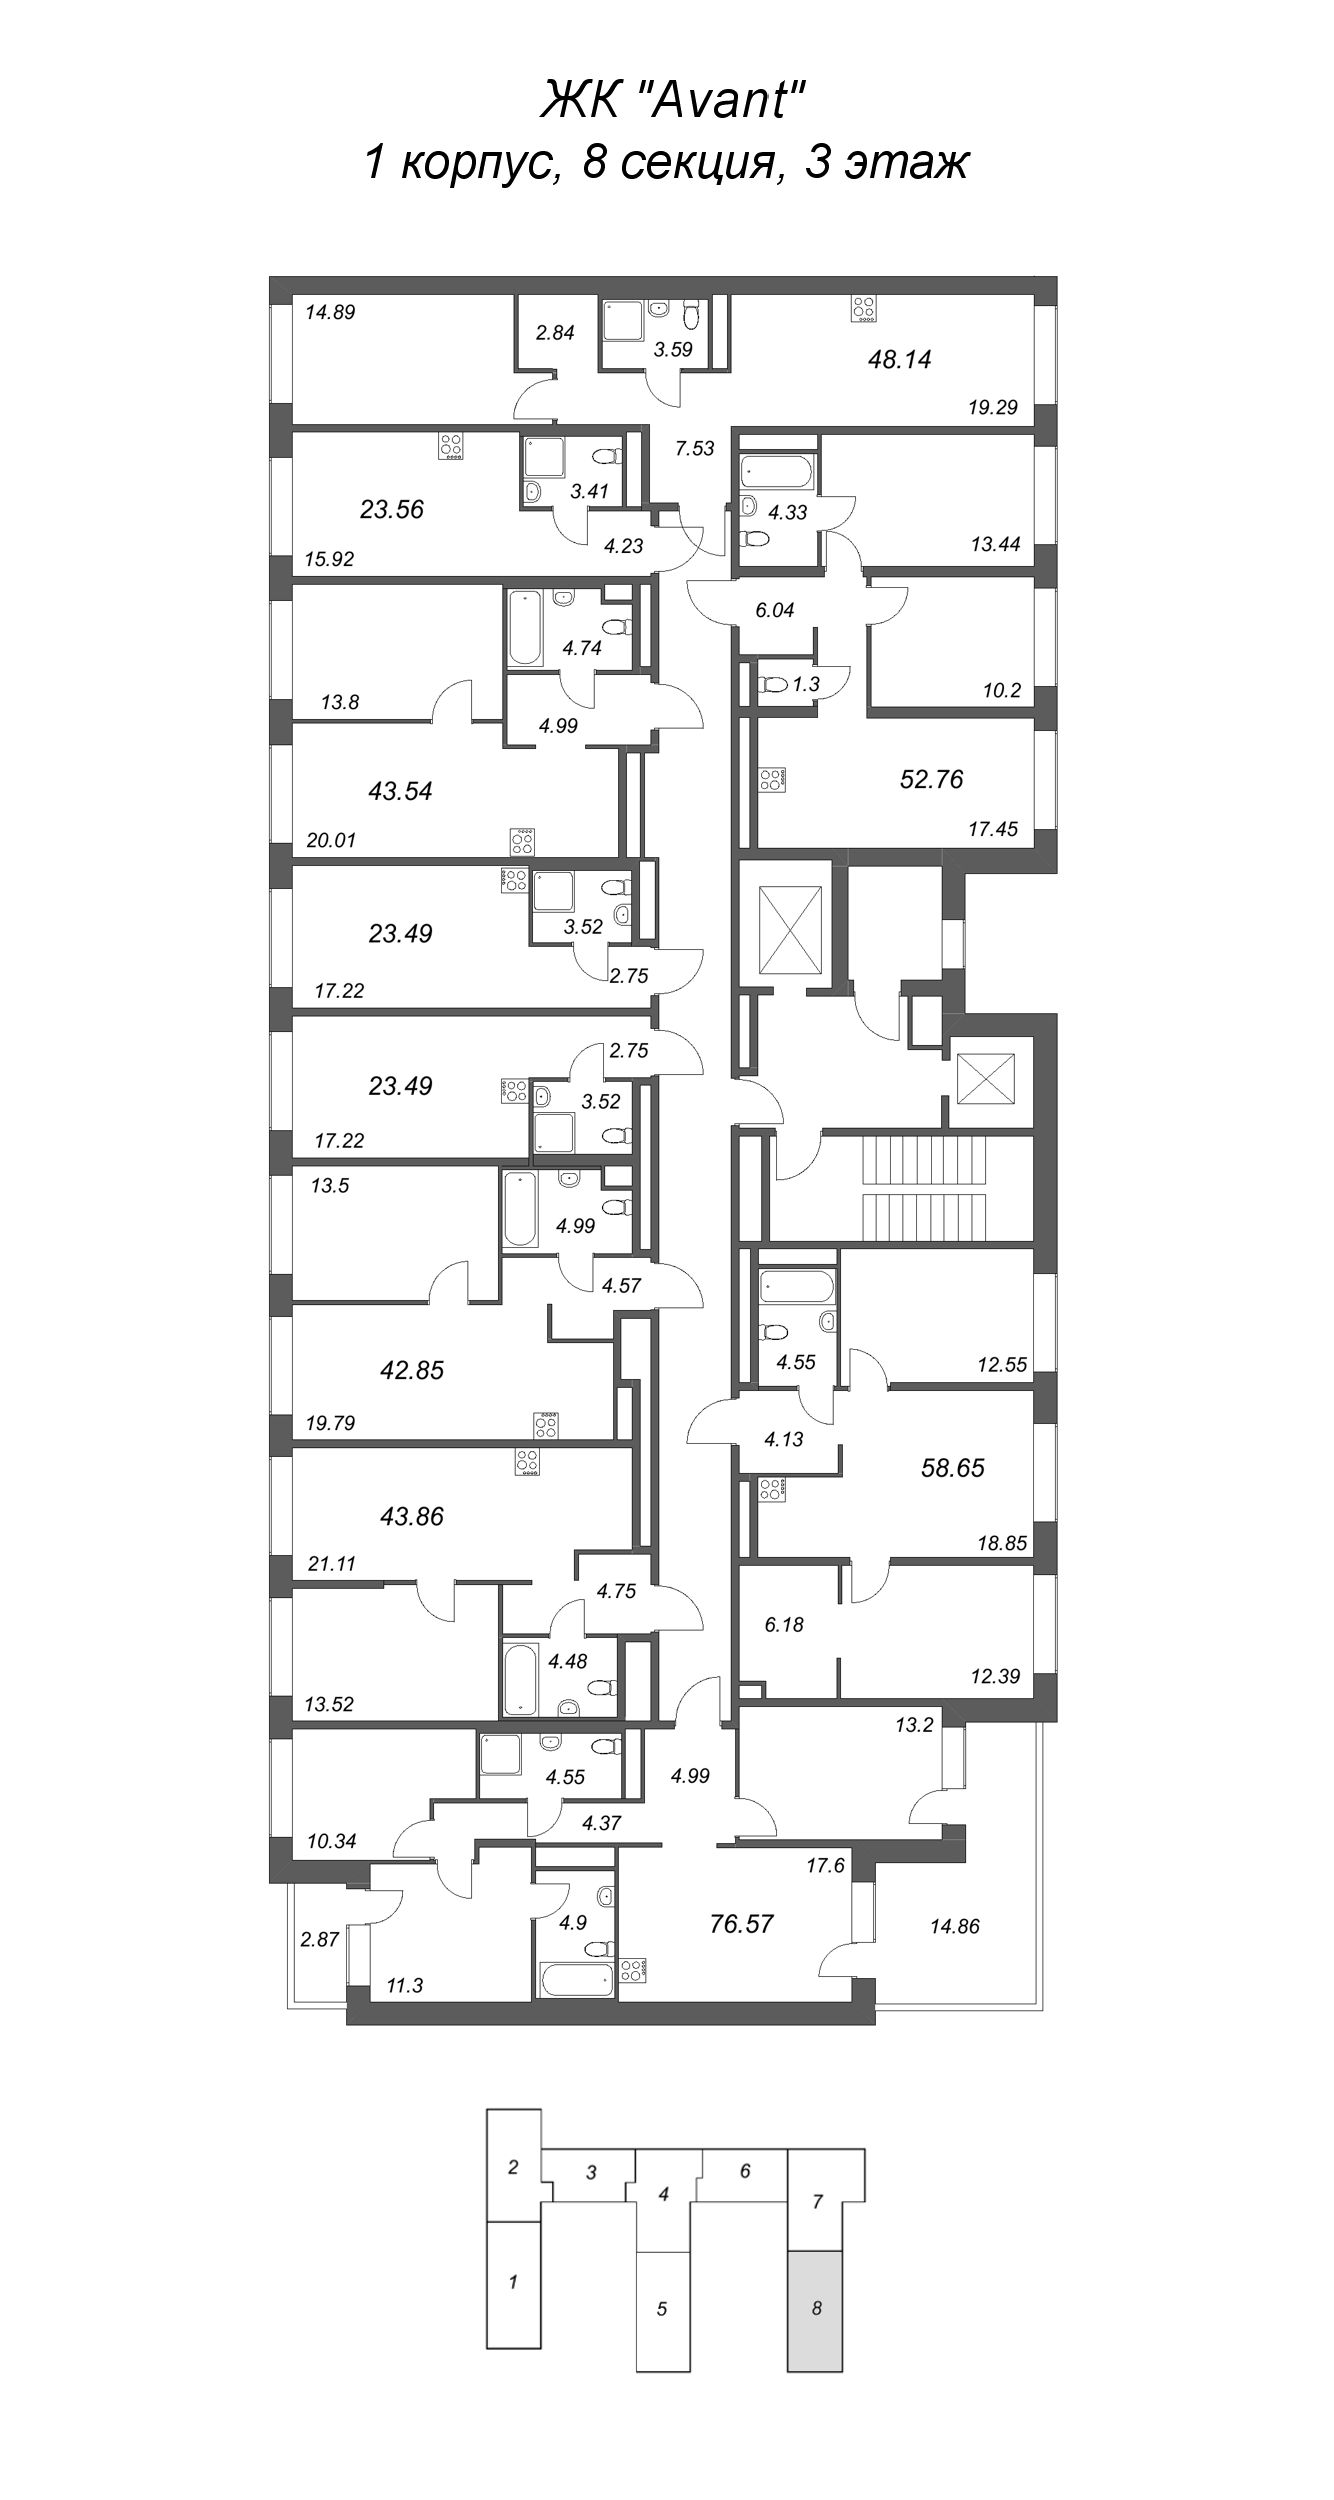 2-комнатная (Евро) квартира, 43.86 м² - планировка этажа